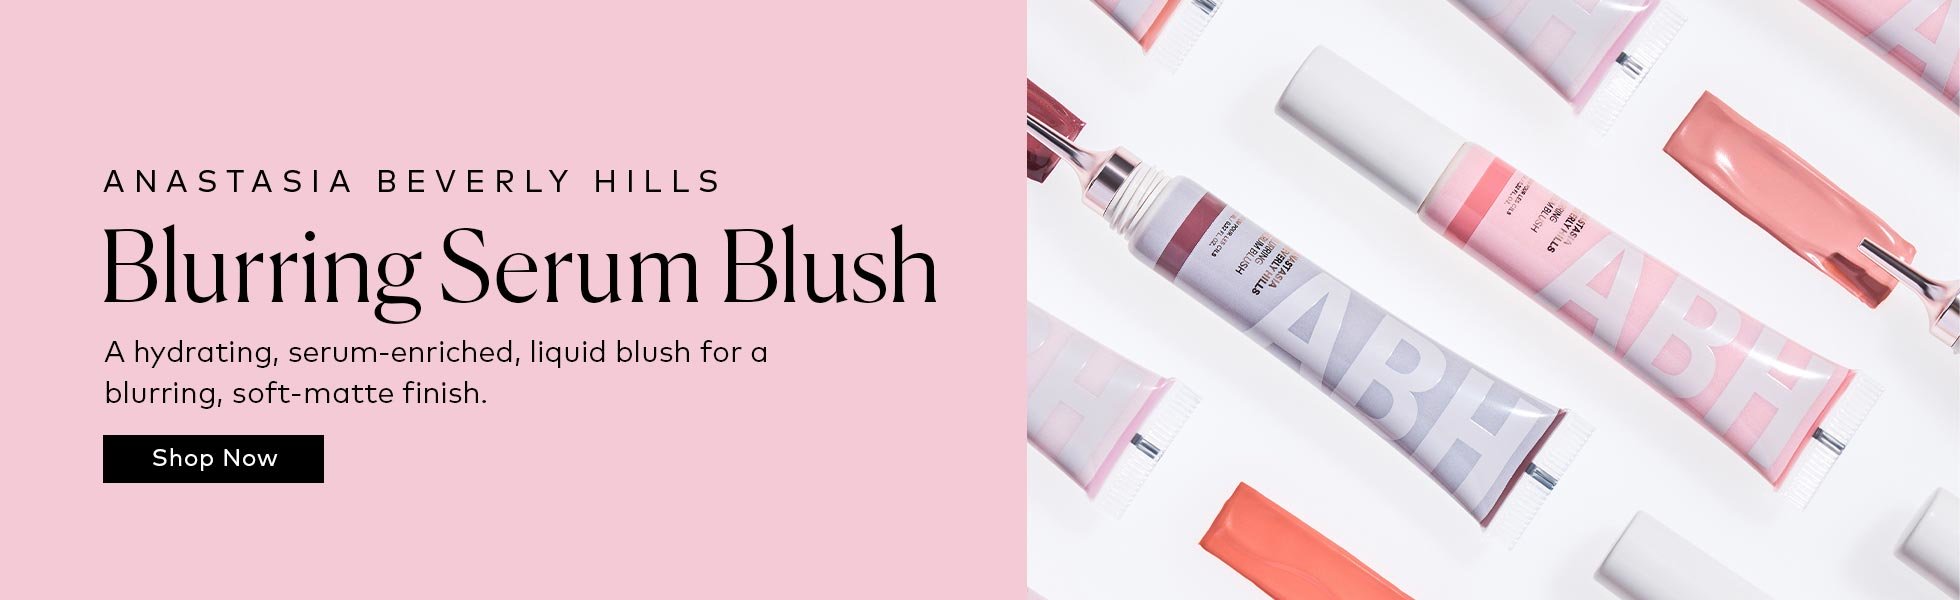 Shop the Anastasia Beverly Hills Blurring Serum Blush at Beautylish.com